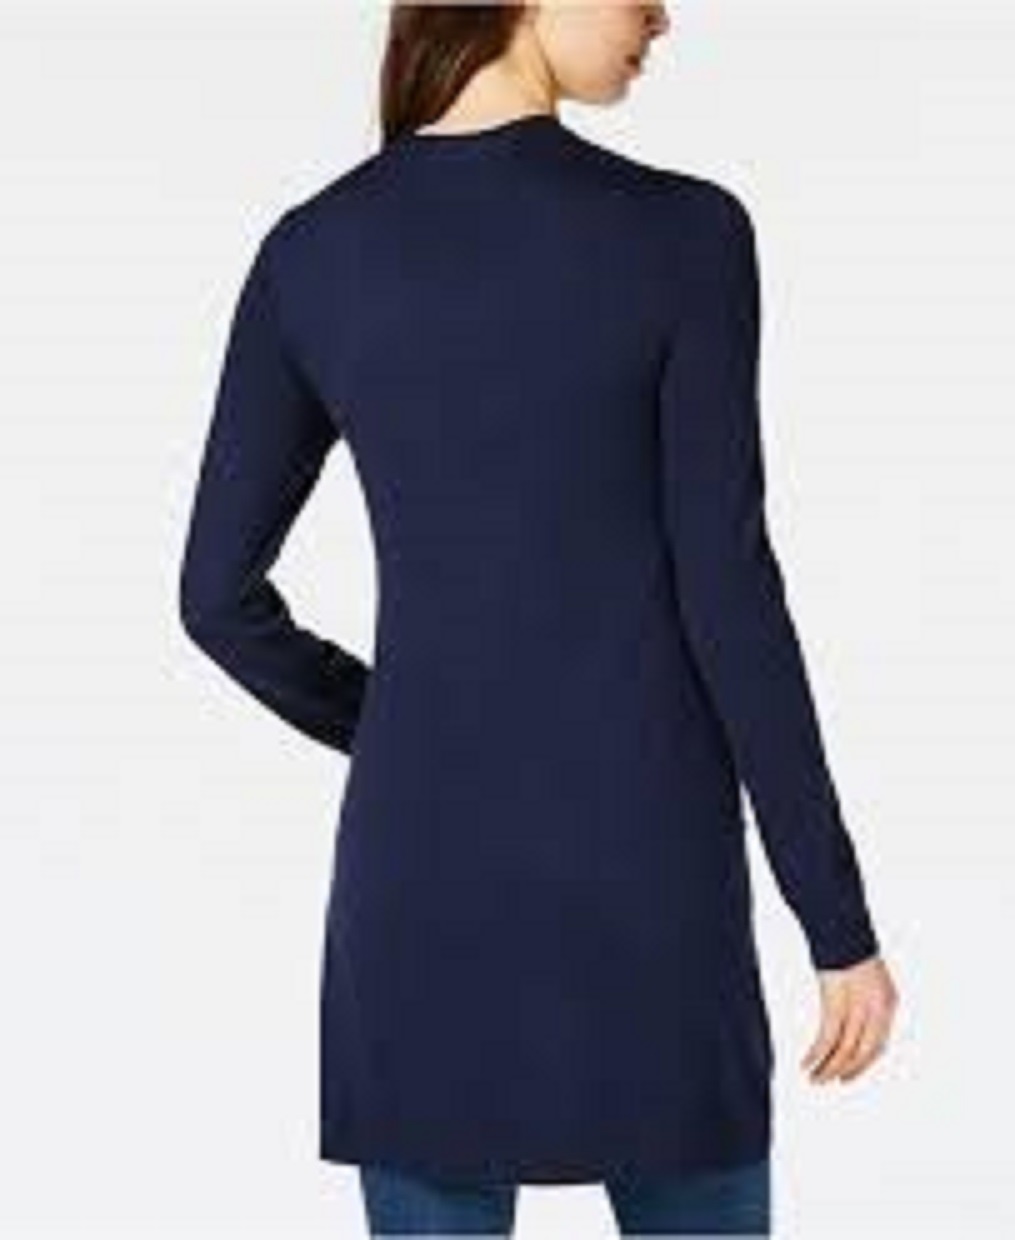 Maison Jules Women's Open-Front Cardigan Sweater Blue Size X-Small